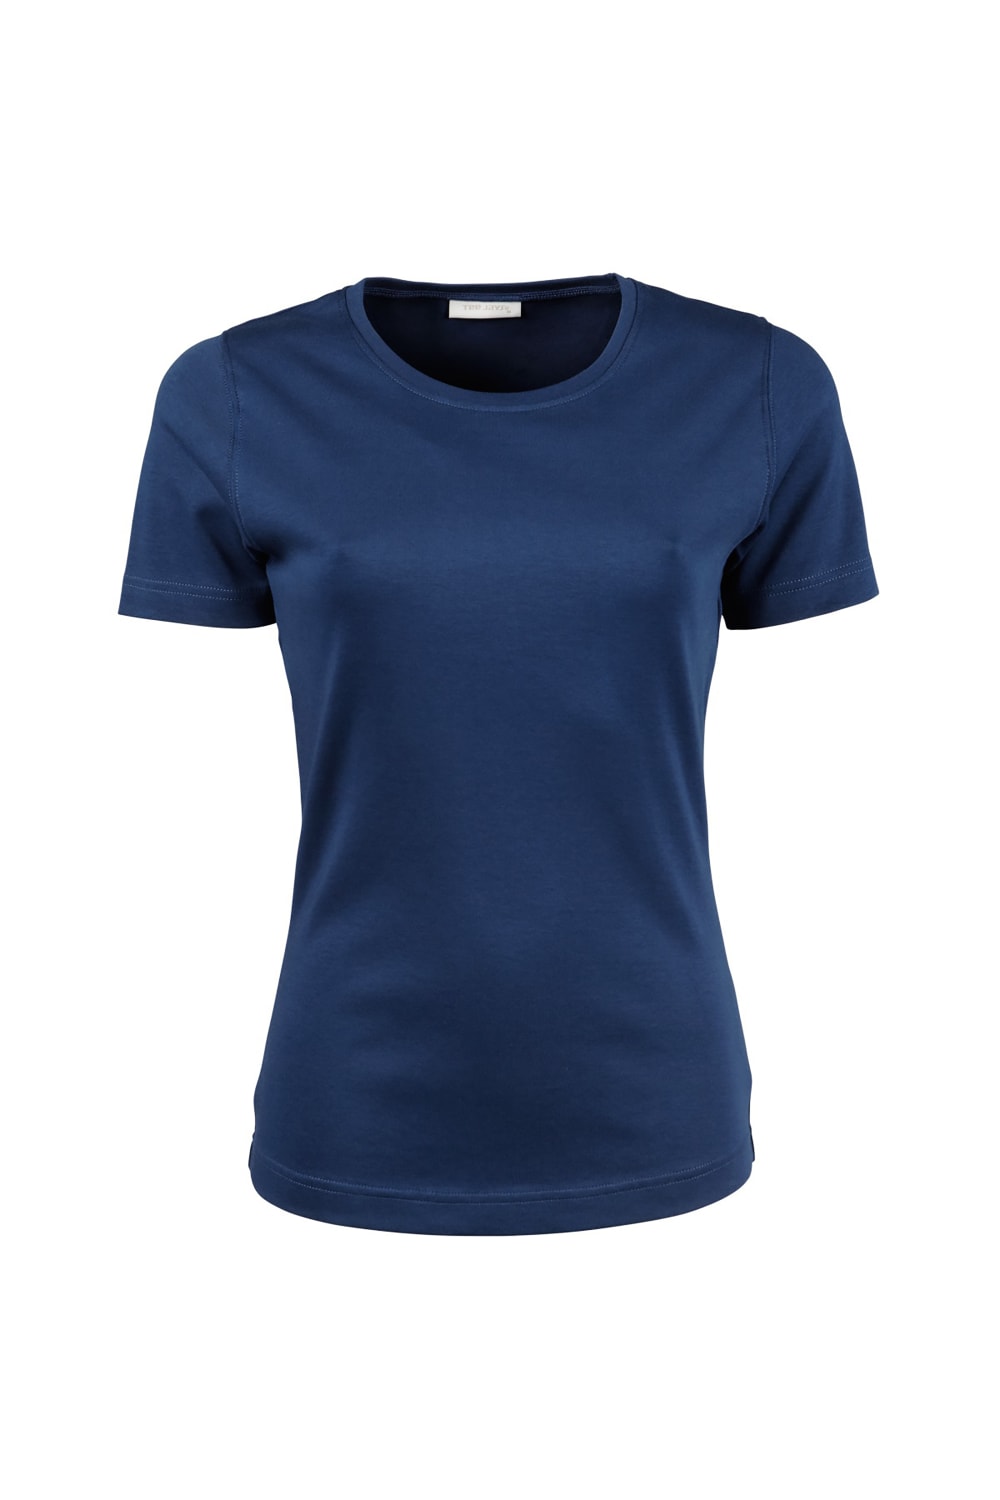 Tee Jays Womens/Ladies Interlock Short Sleeve T-Shirt (Indigo)